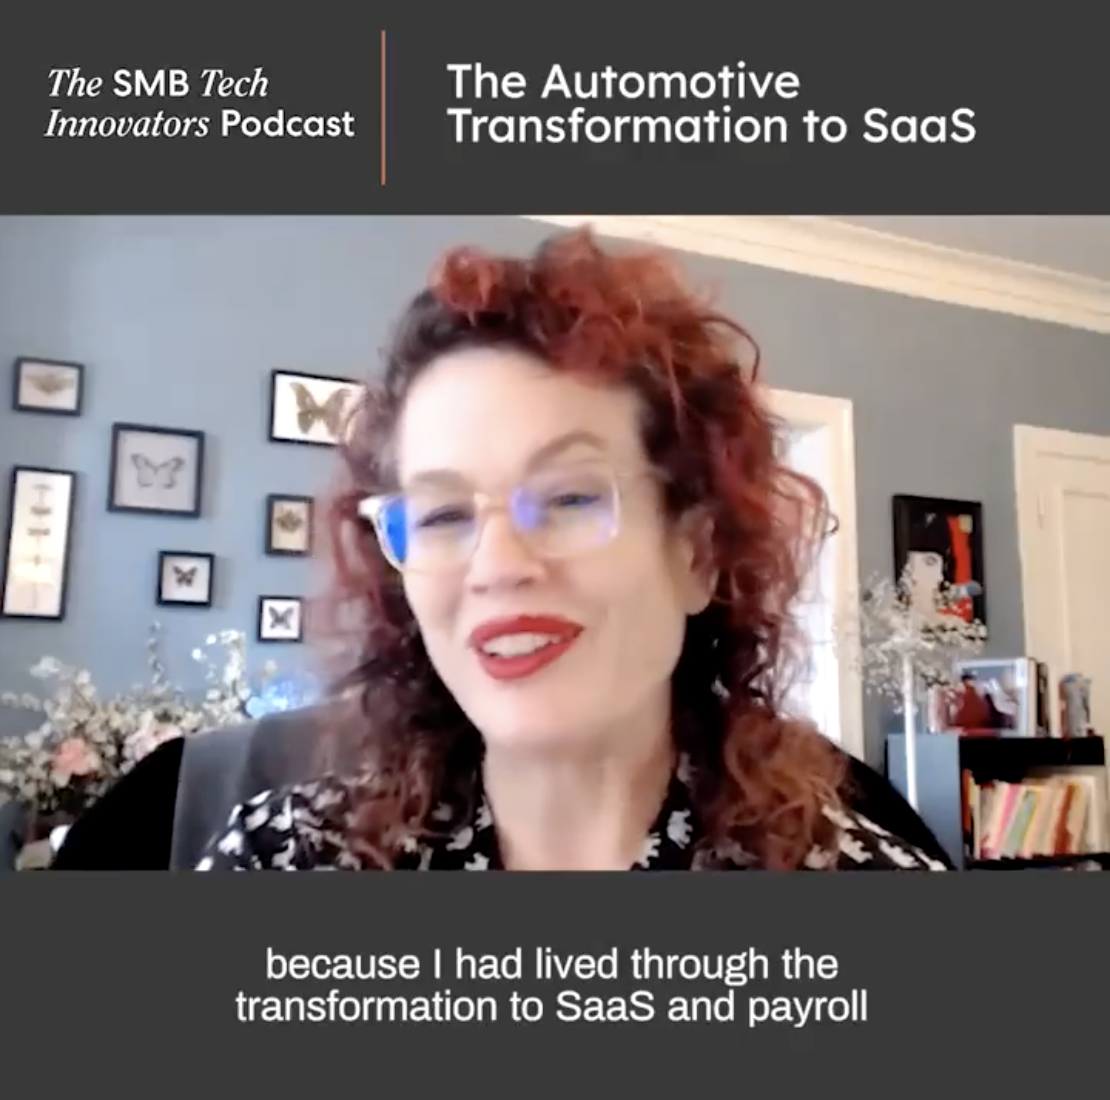 The Automotive Transformation into SaaS